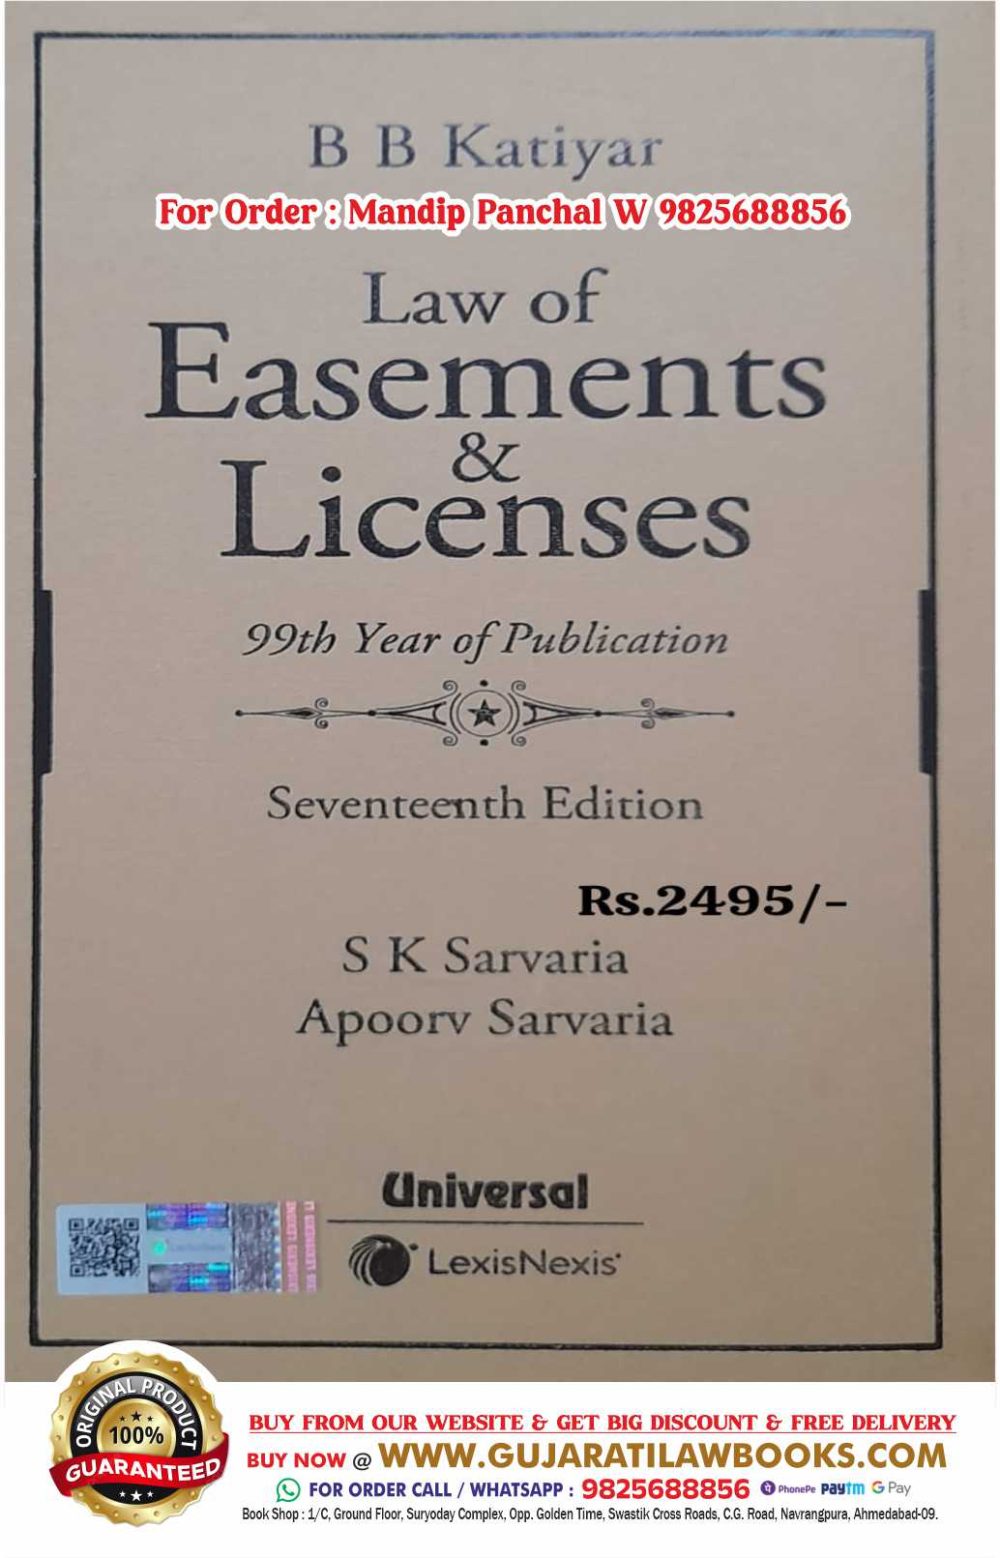 B B Katiyar's LAW OF EASEMENTS & LICENCES - Latest 17th Edition - Universal LexisNexis